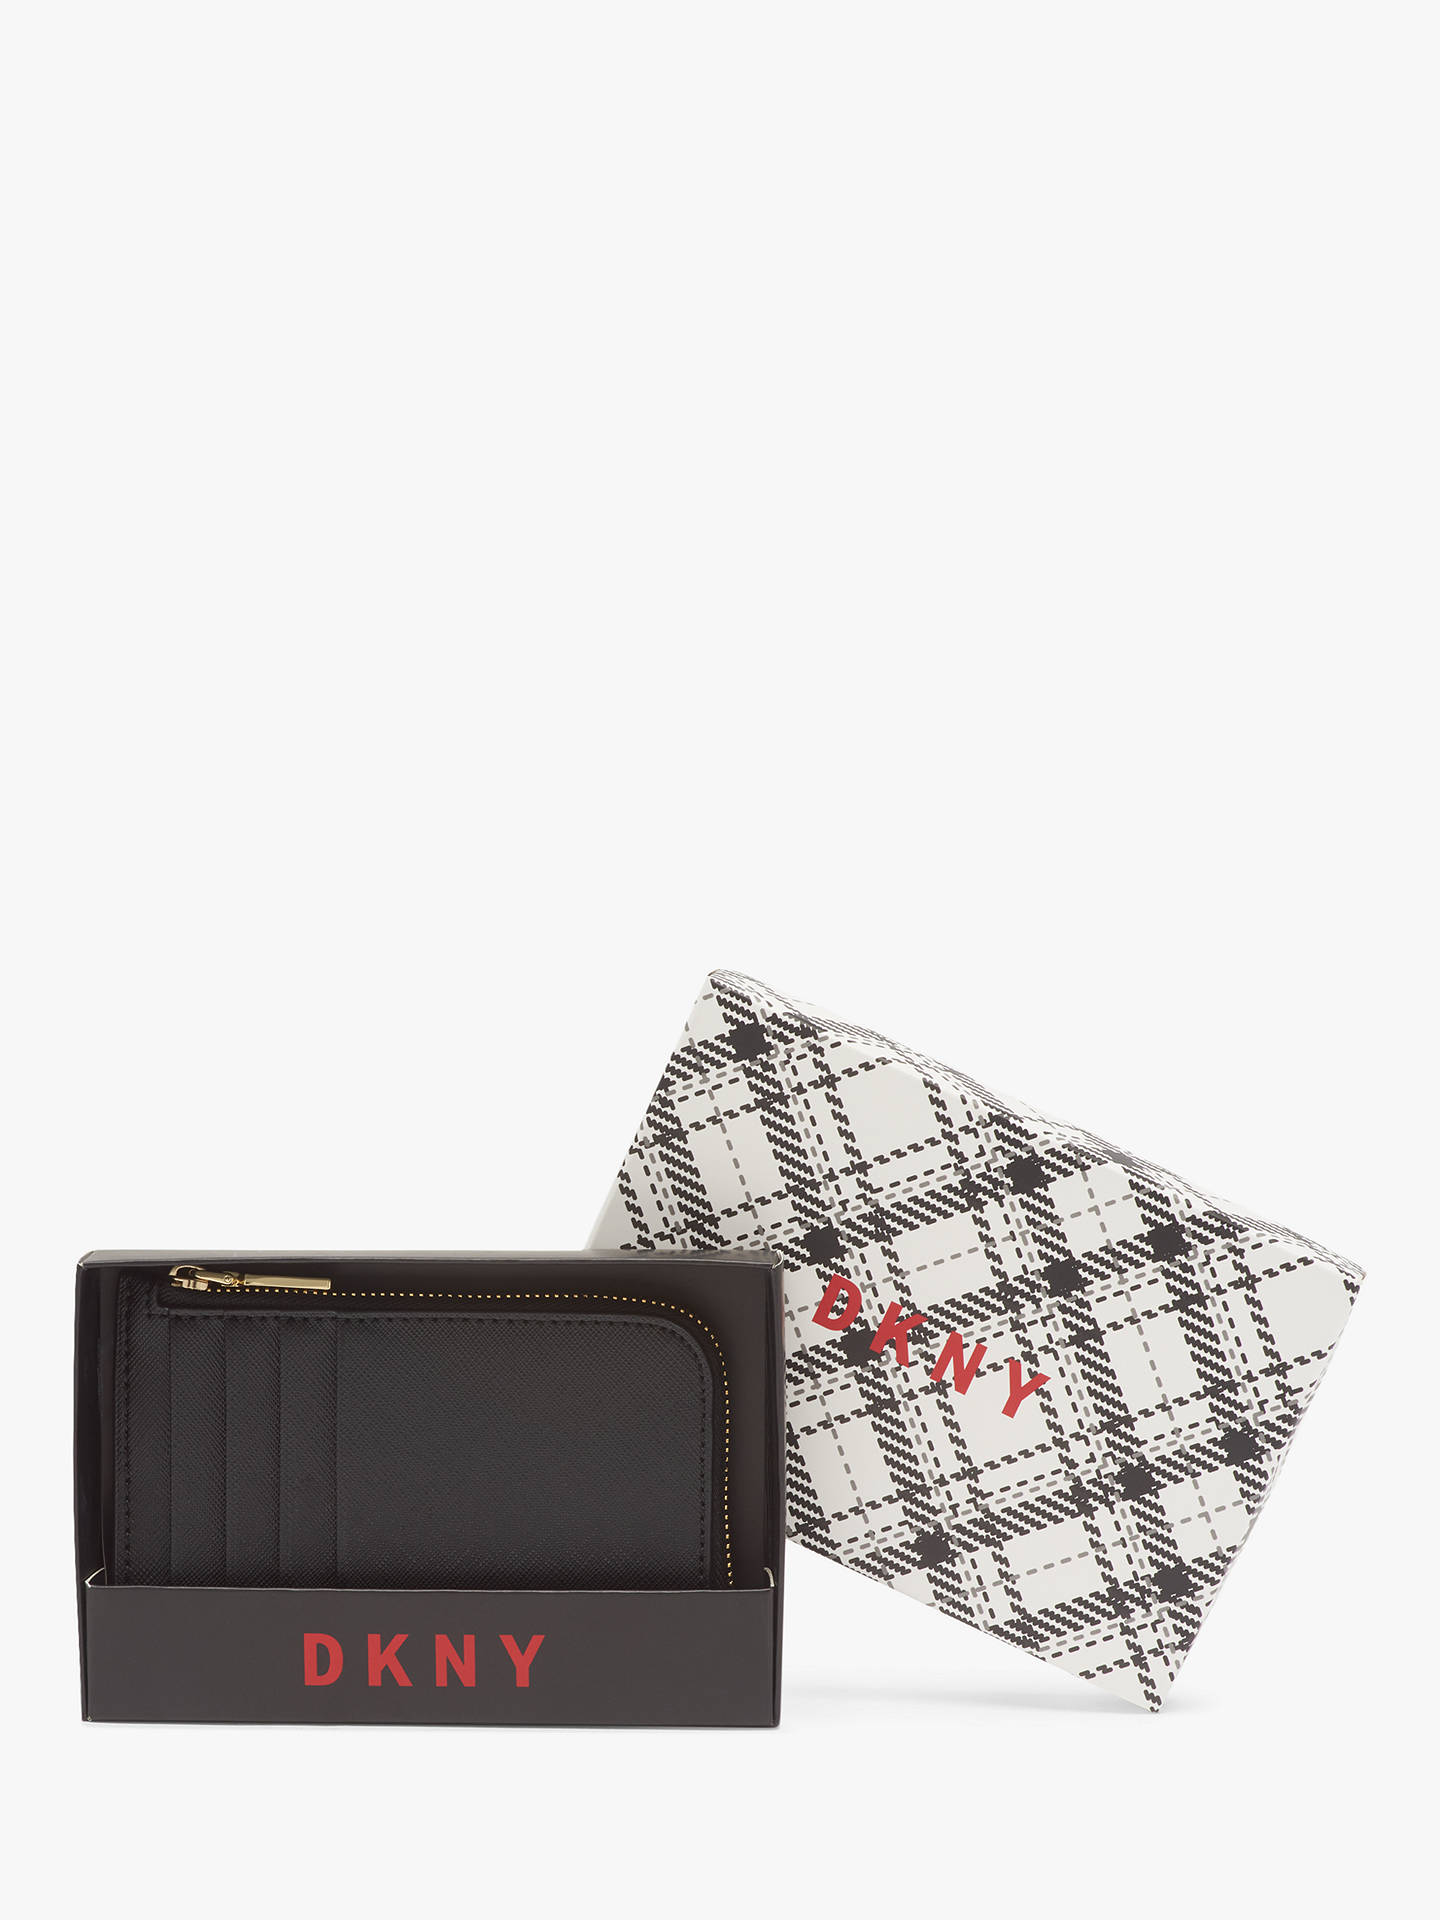 DKNY Zip Around Card Holder at John Lewis & Partners